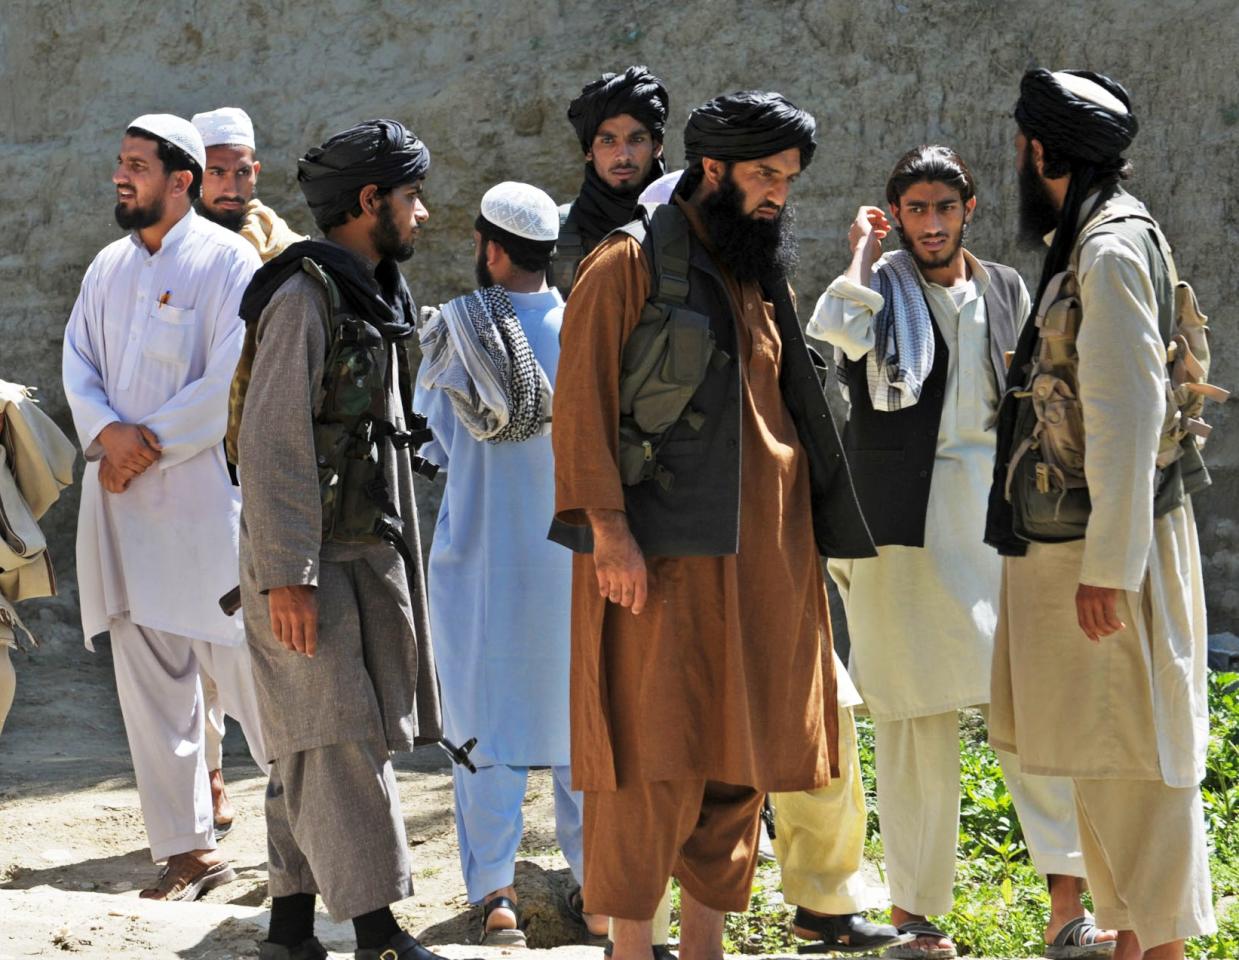 روسيا تنسق استخباريا مع طالبان أفغانستان ضد "داعش"